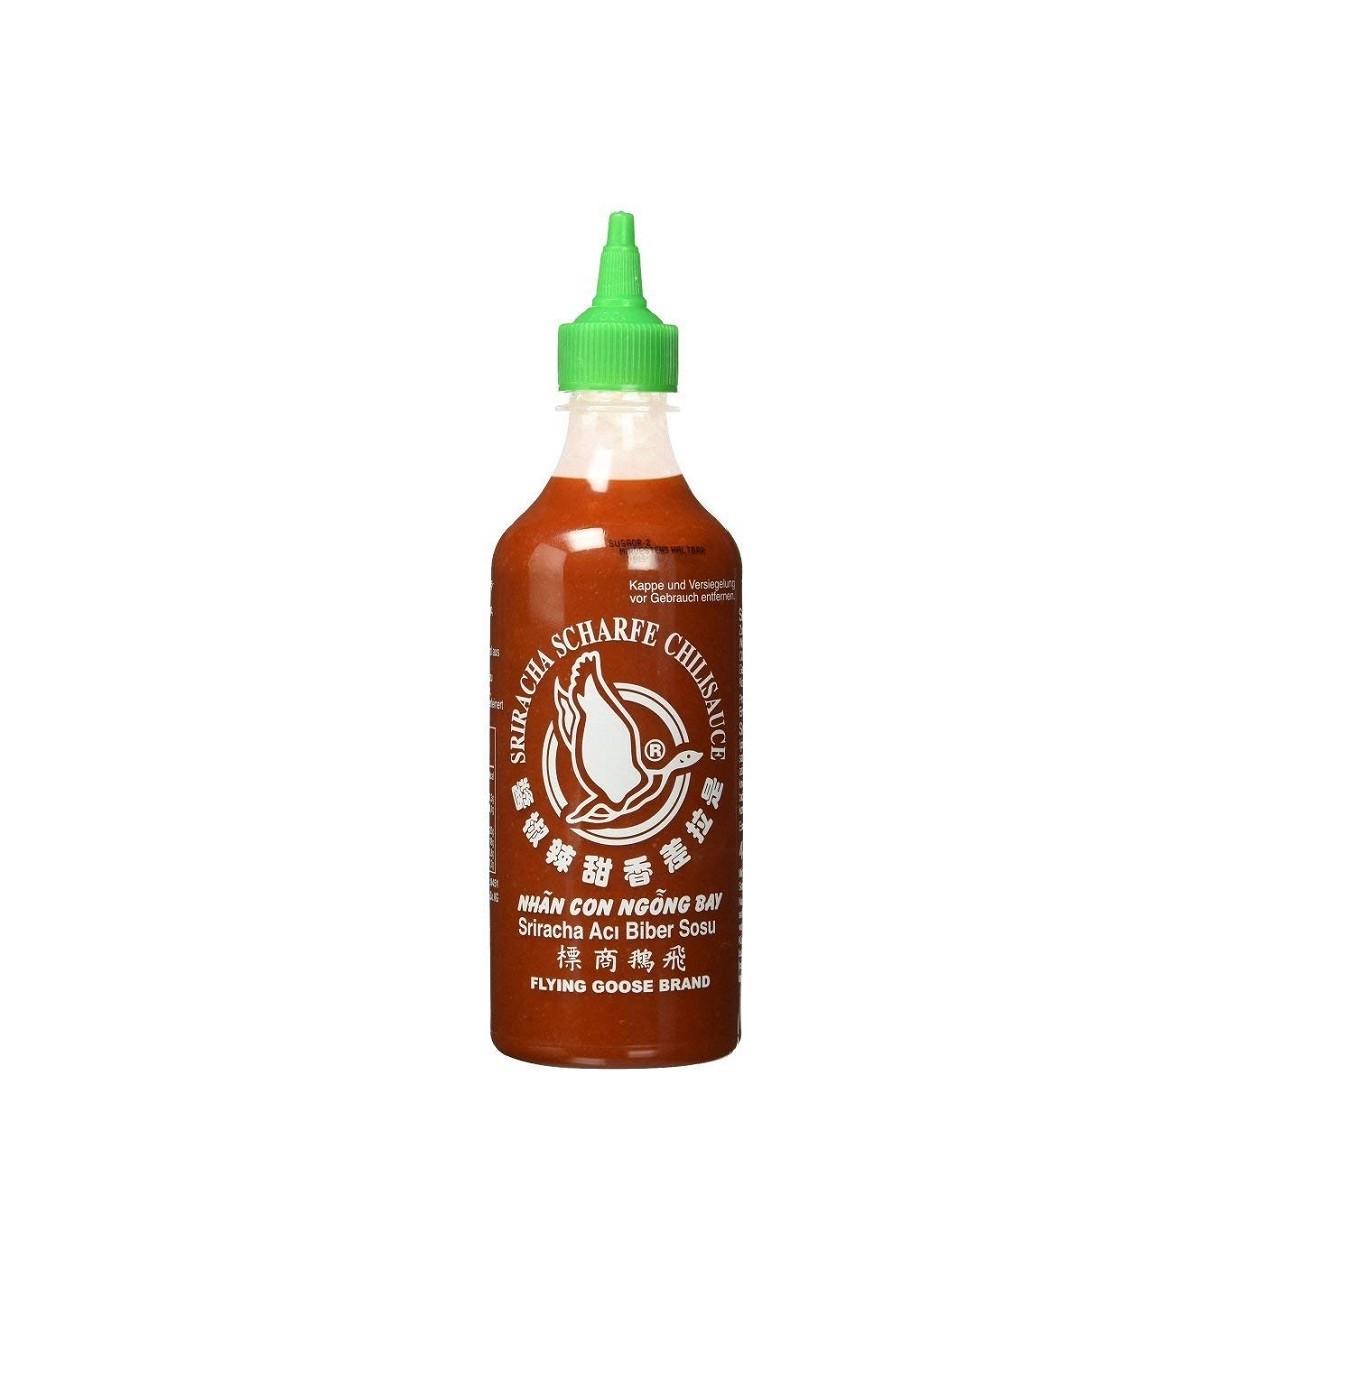 Flying Goose Sriracha scharfe Chilisauce 455ml Würzsauce aus Thailand